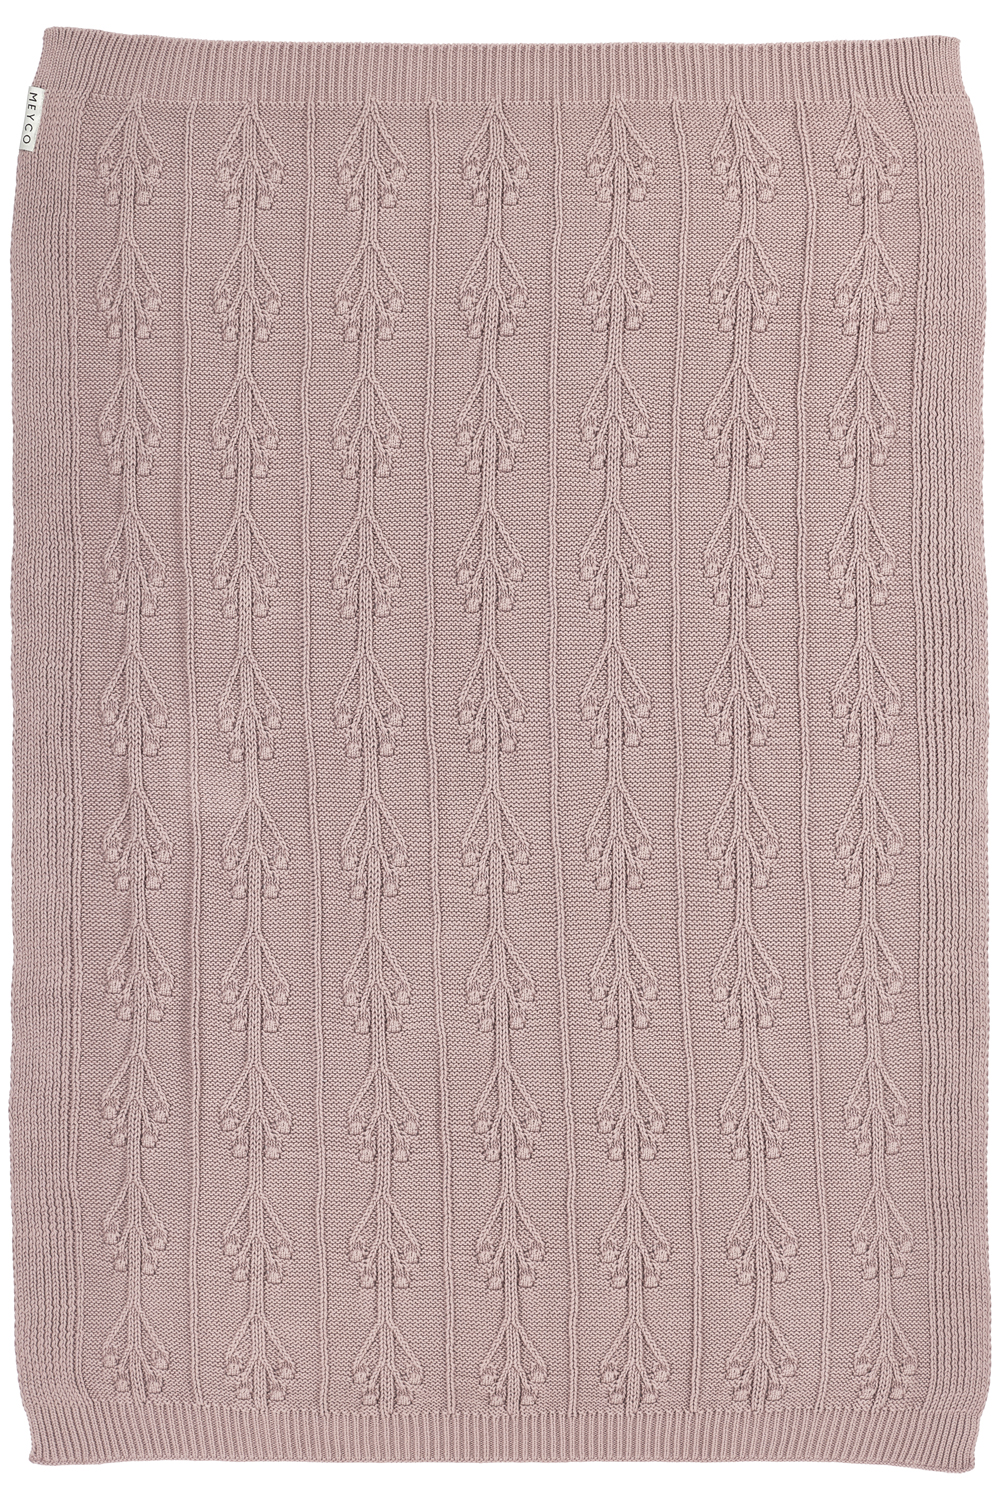 Crib bed blanket Romantic Flower - lilac - 75x100cm